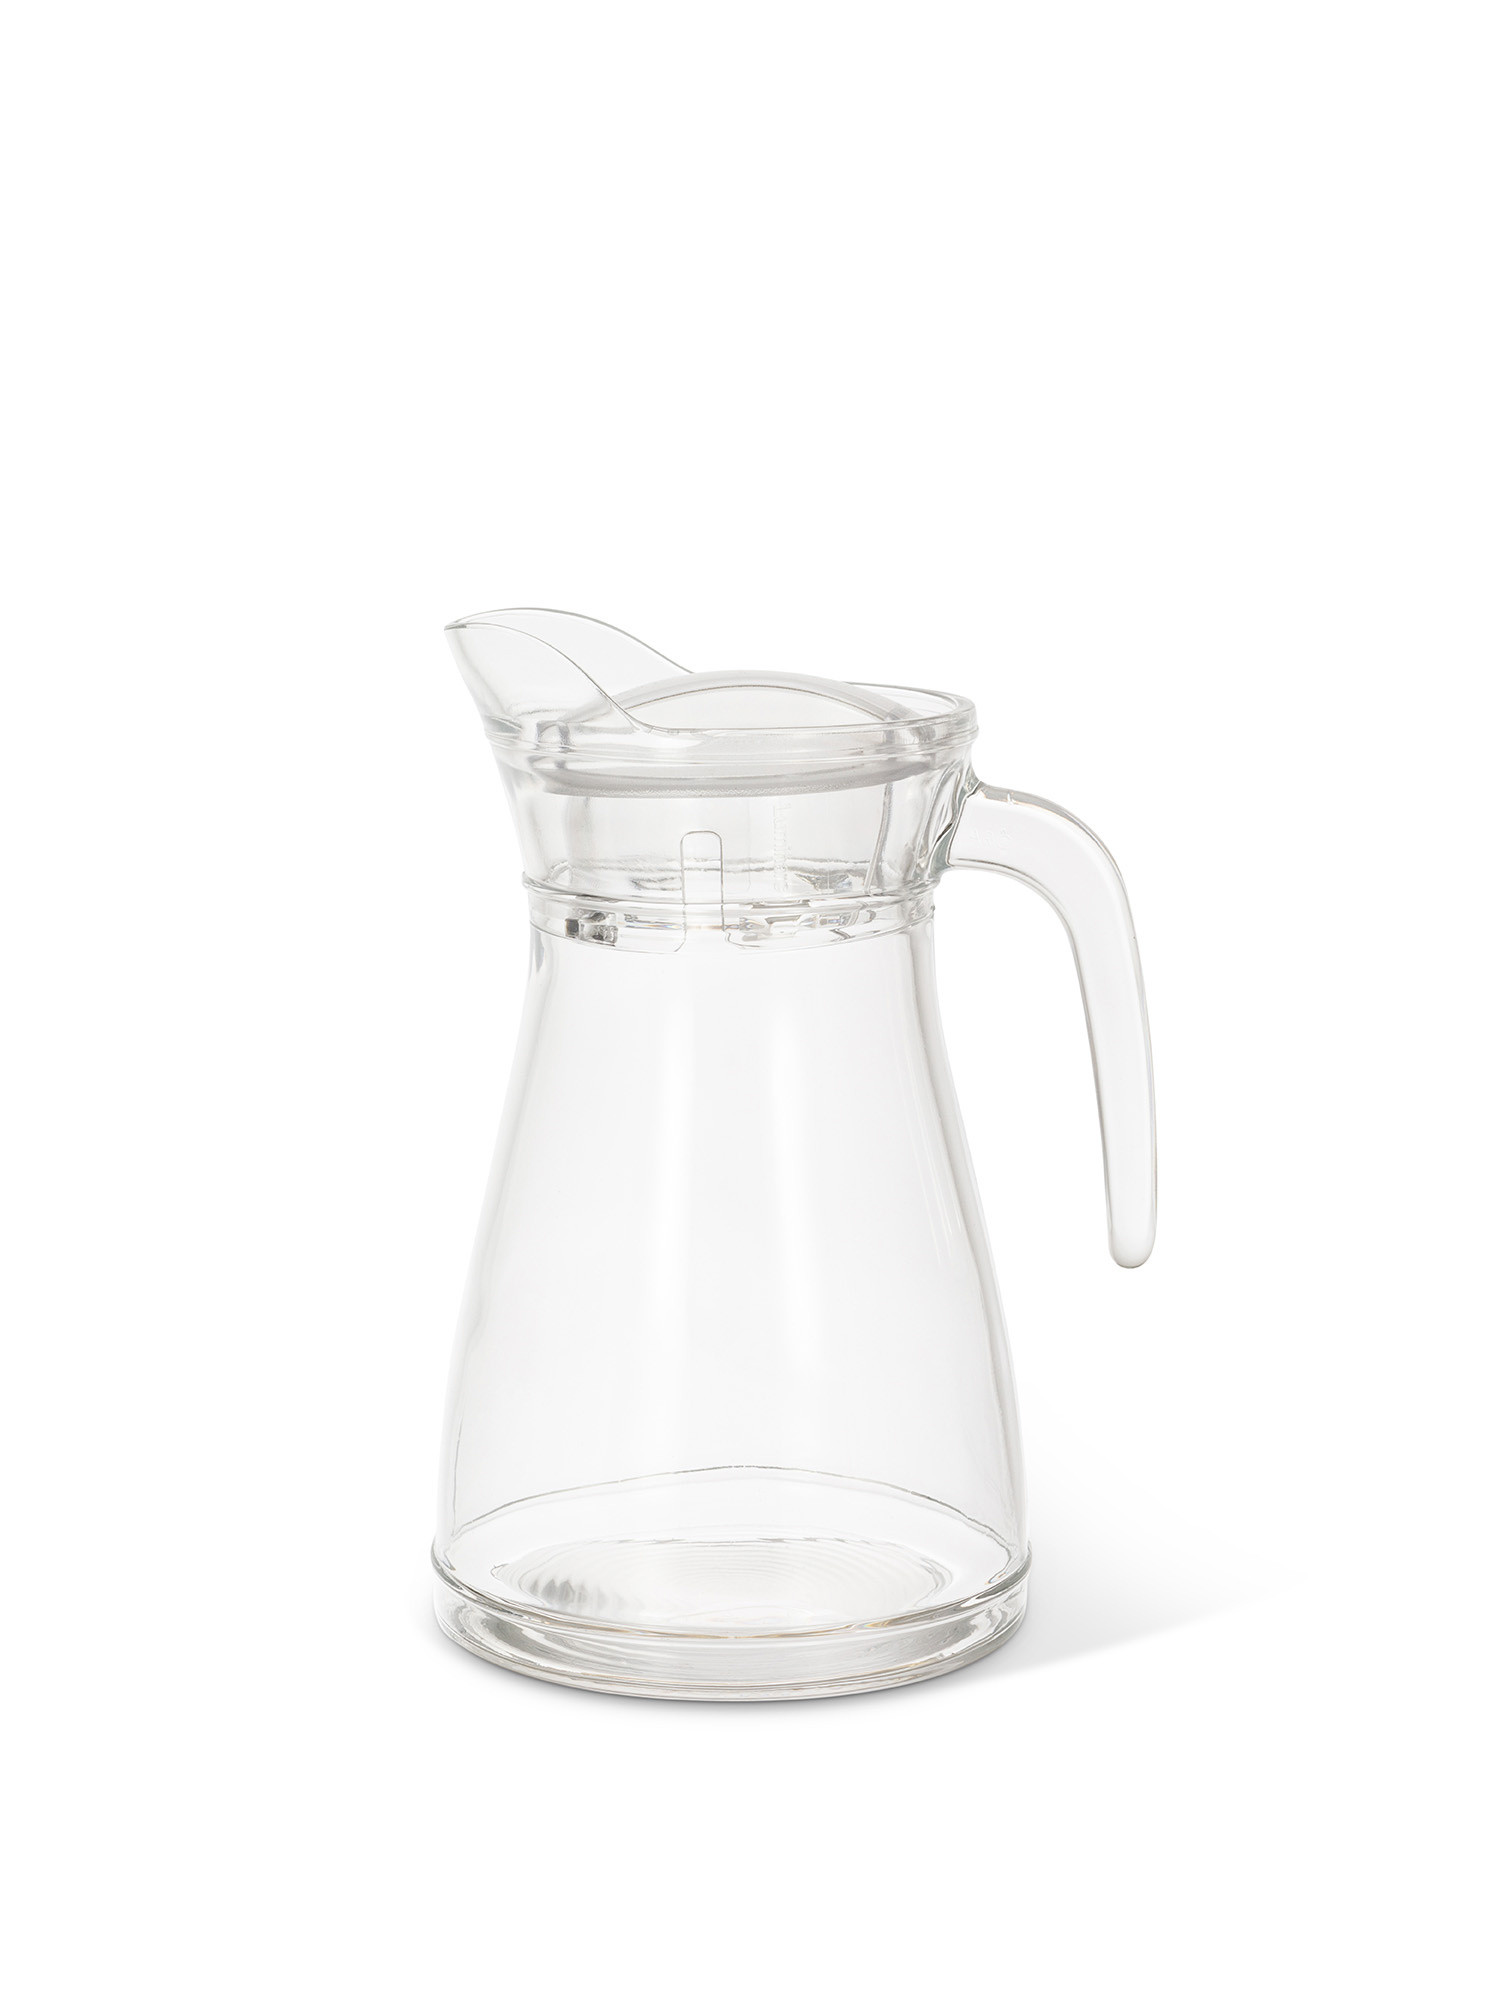 Glass jug with stopper, Transparent, large image number 0